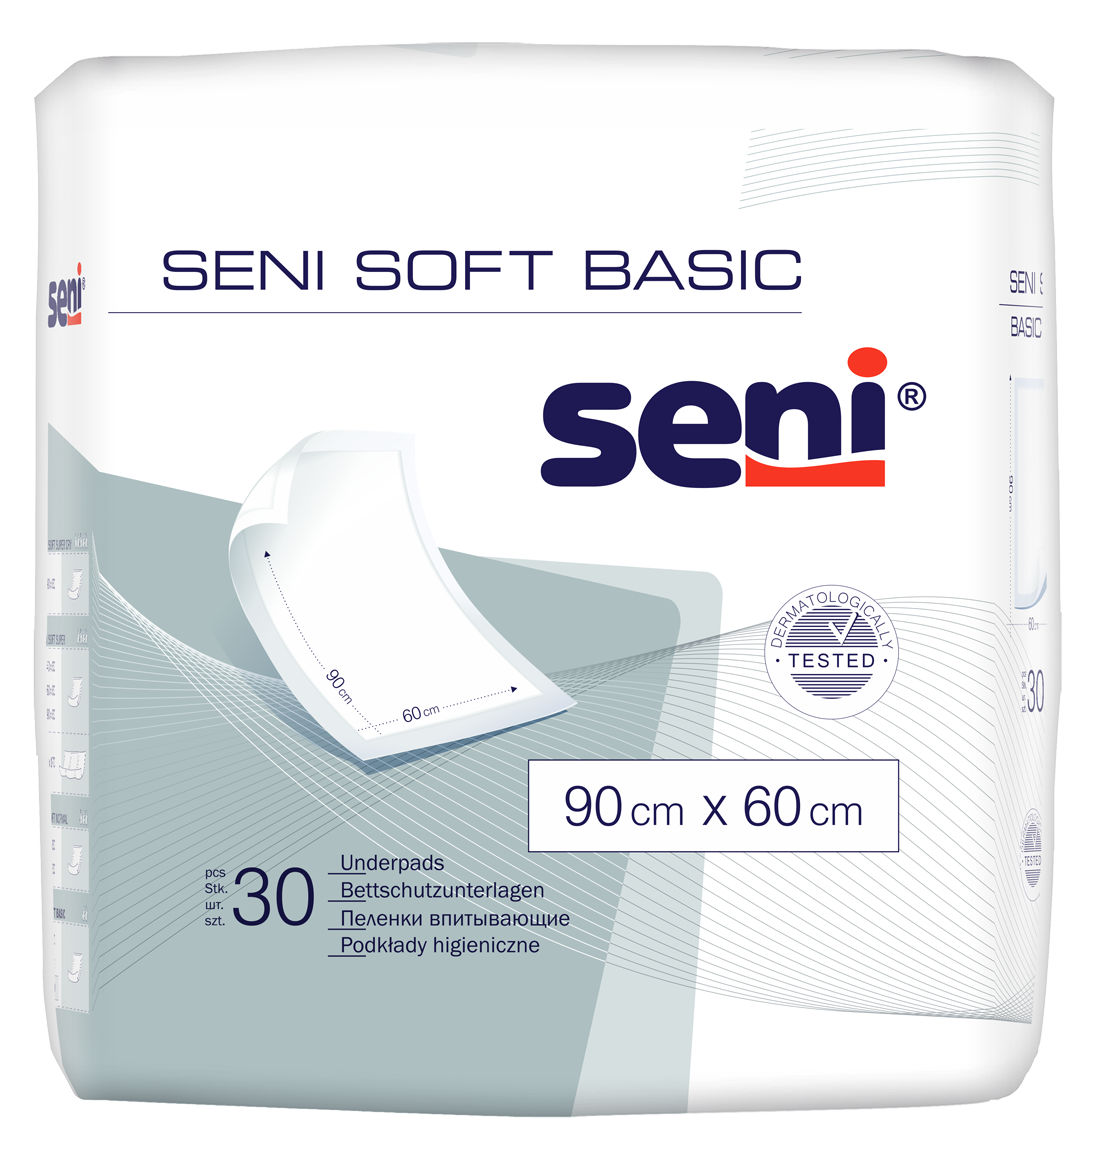 Seni Soft Basic Bettschutzunterlage 90cm x 60cm / 30 Stück